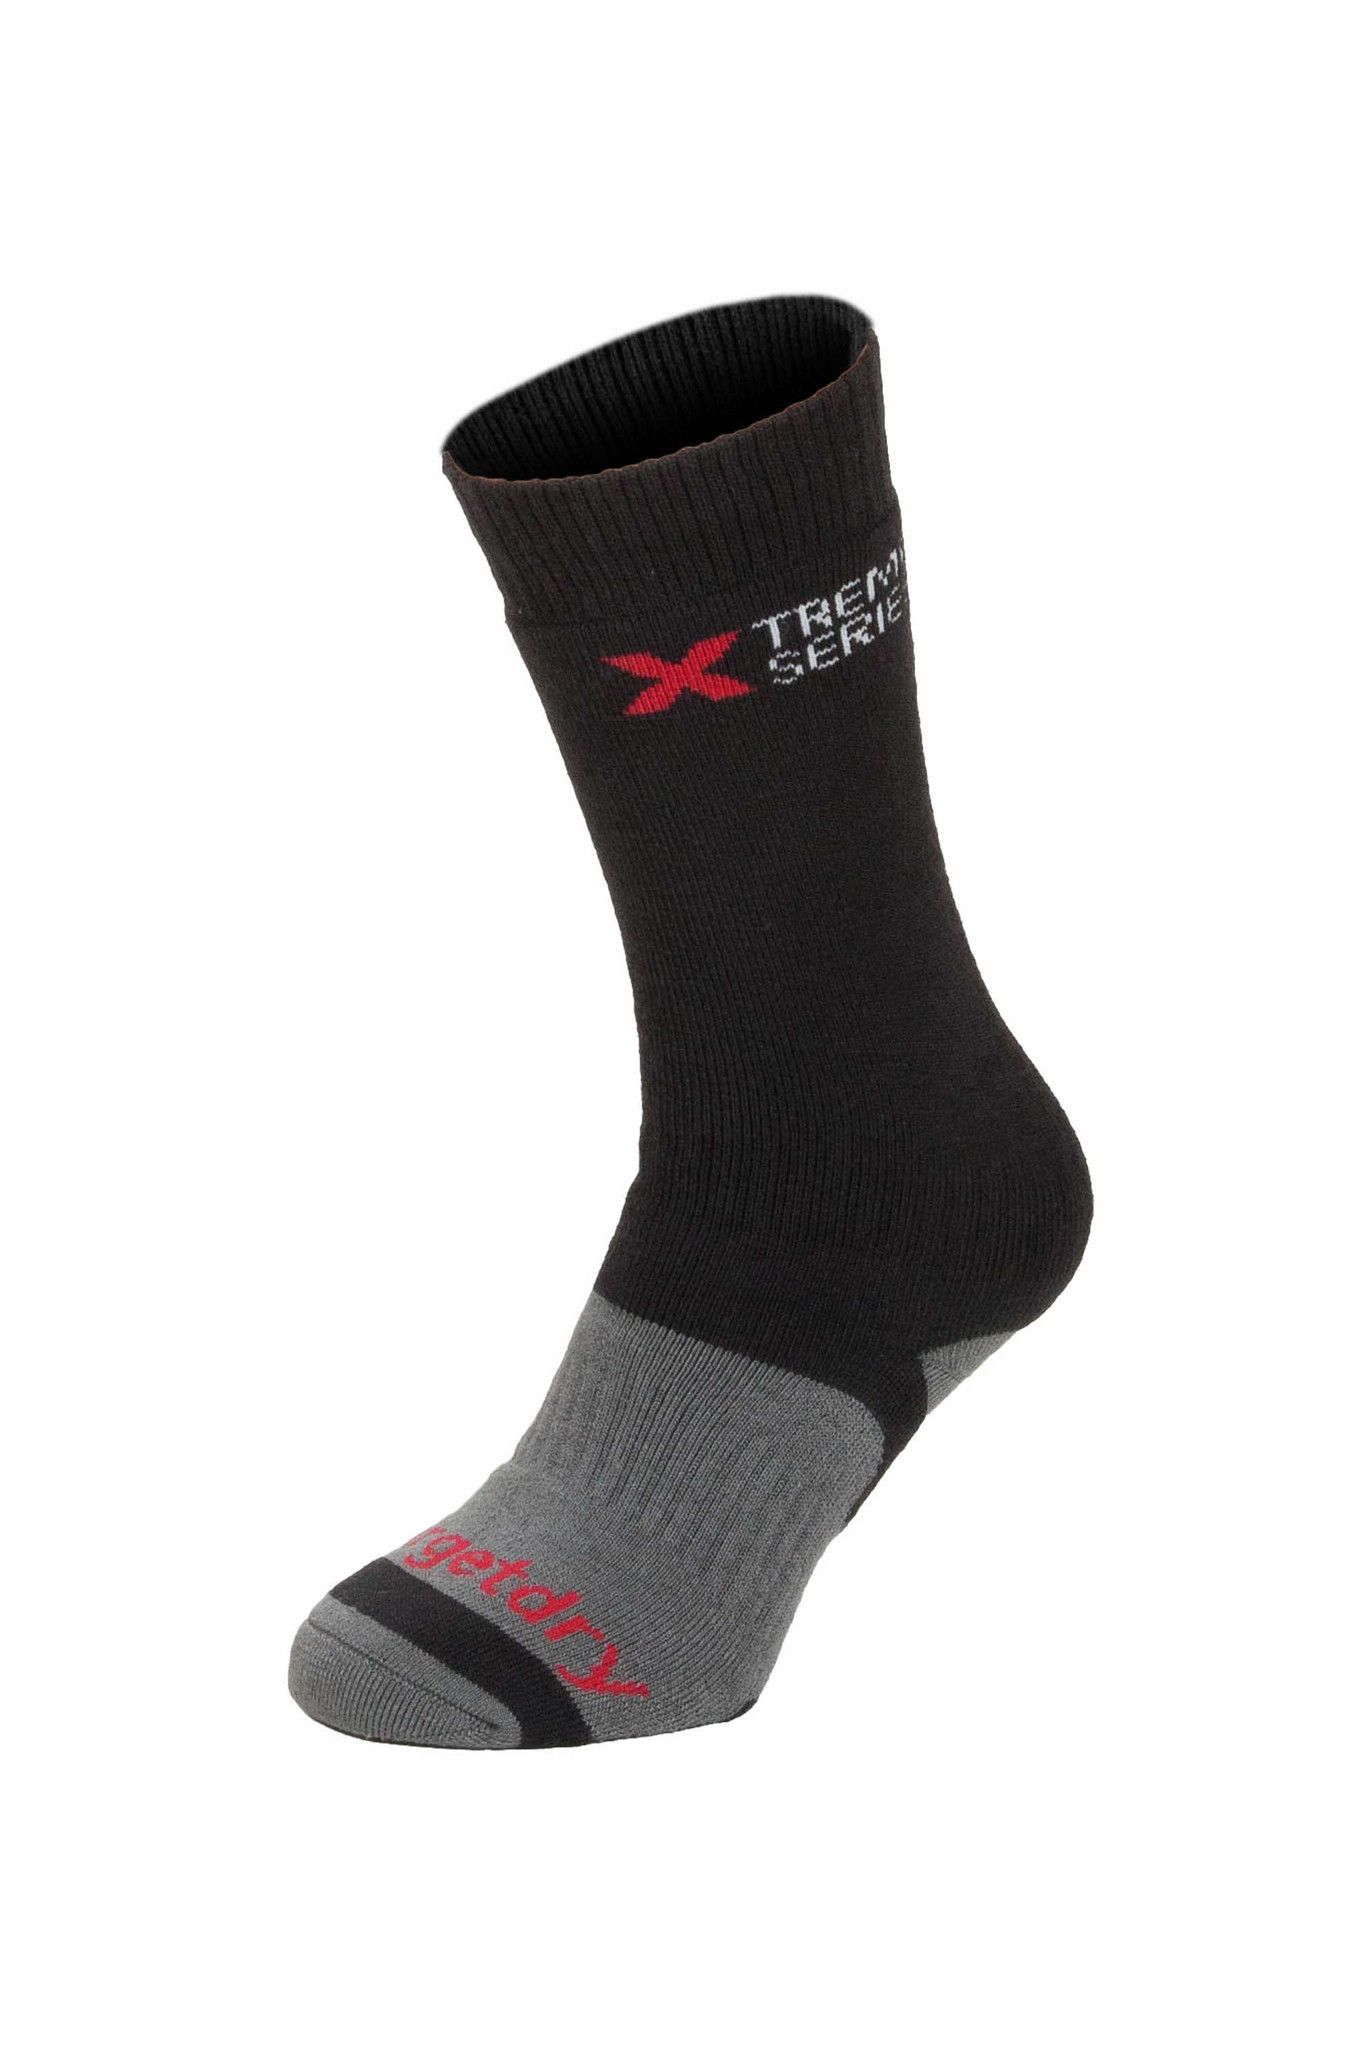 Target Dry Trek Comfort Socks